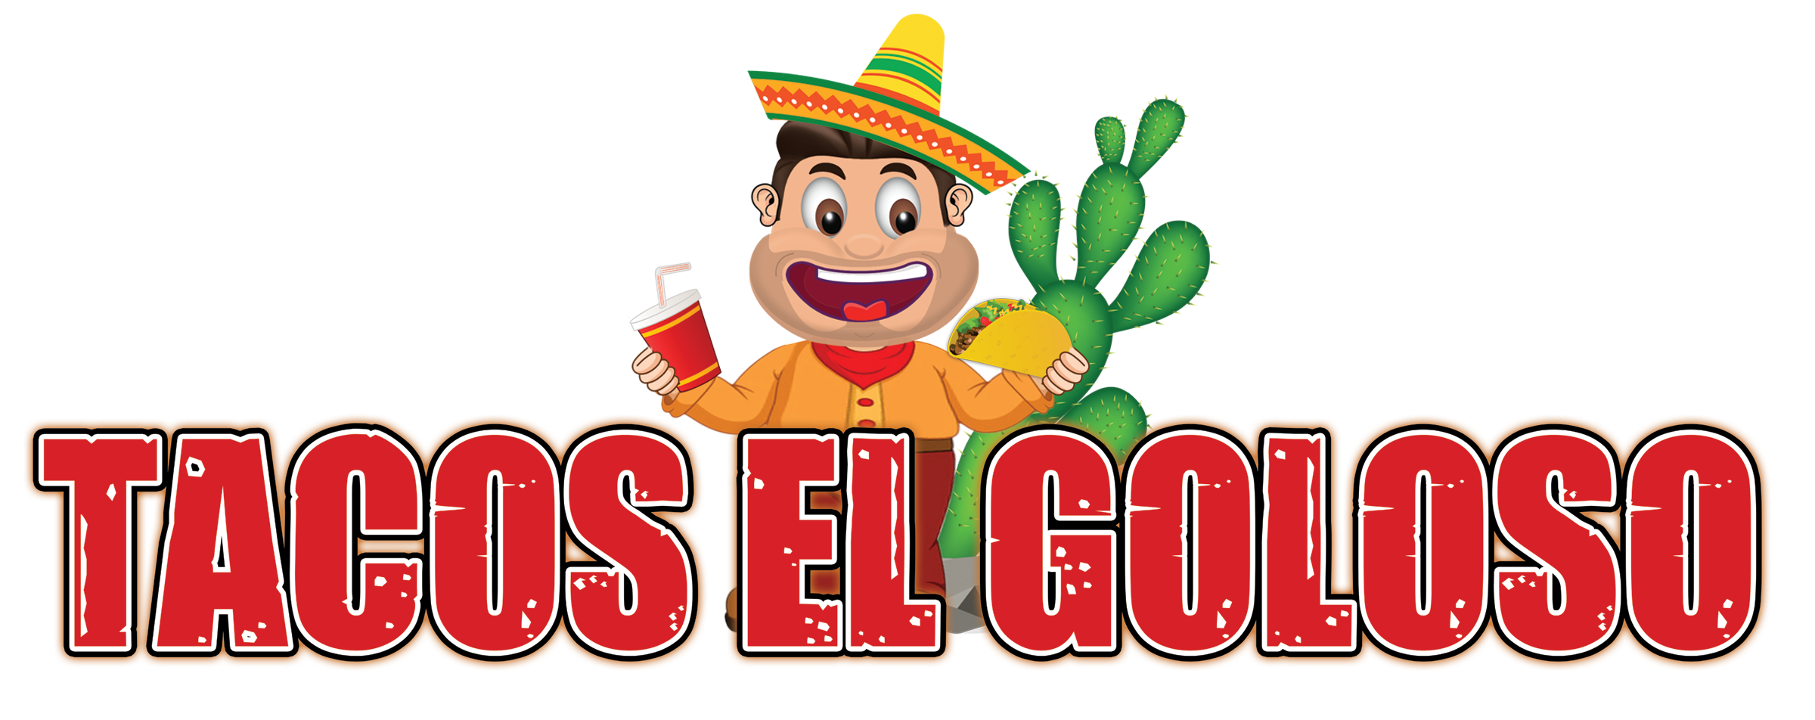 Taco El Goloso- San Pedro 247 North Gaffey Street